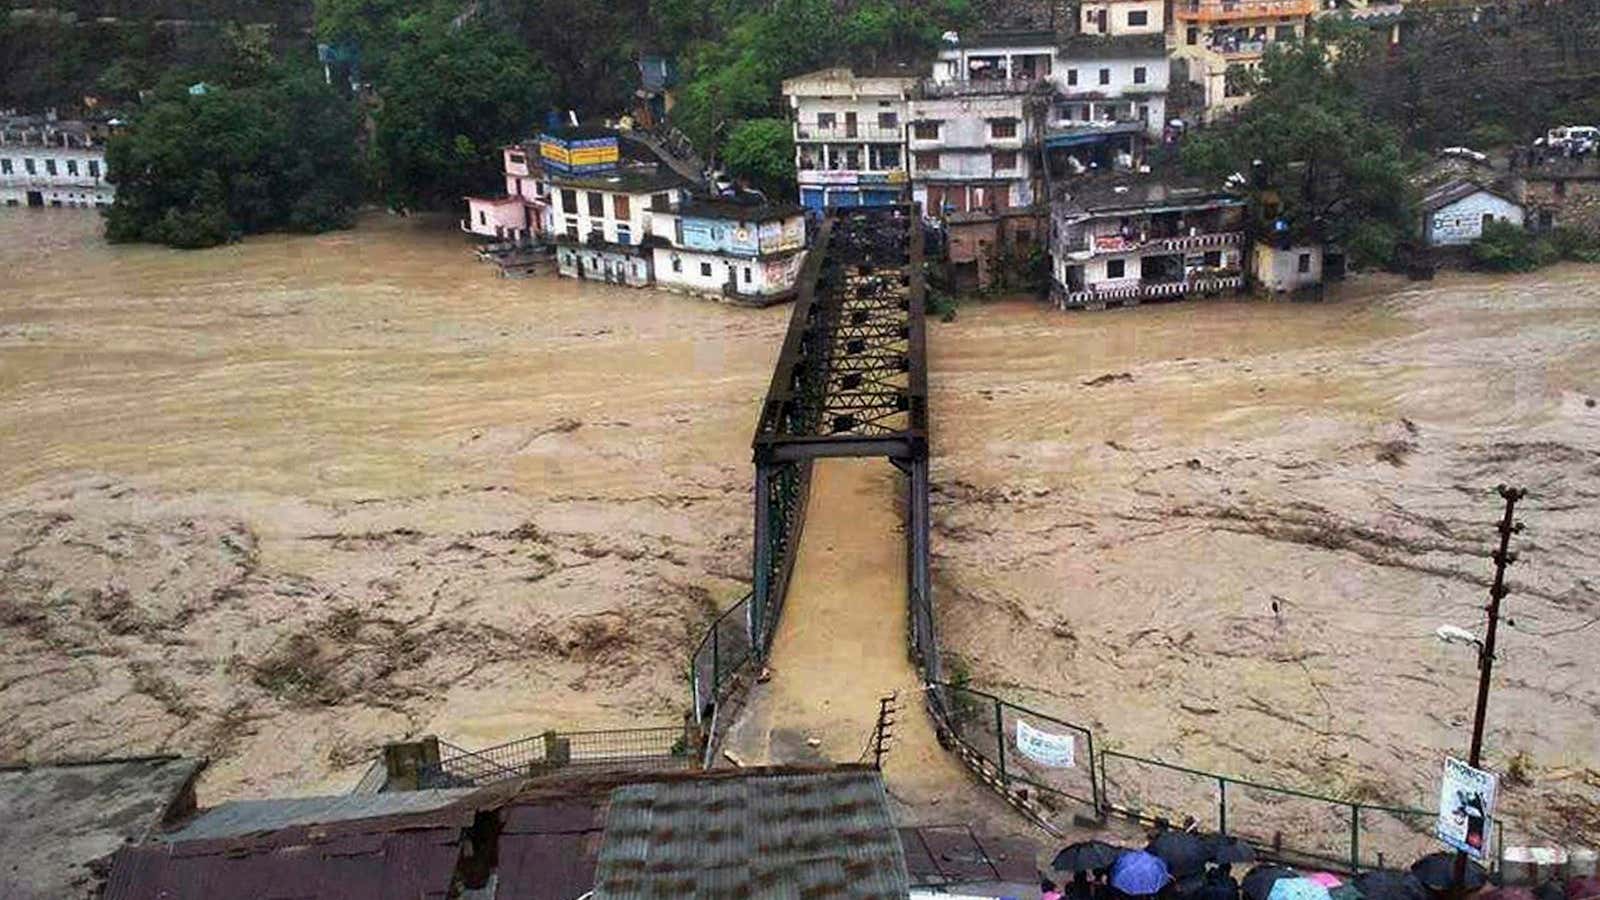 The Uttarakhand floods of 2013 killed thousands of people.